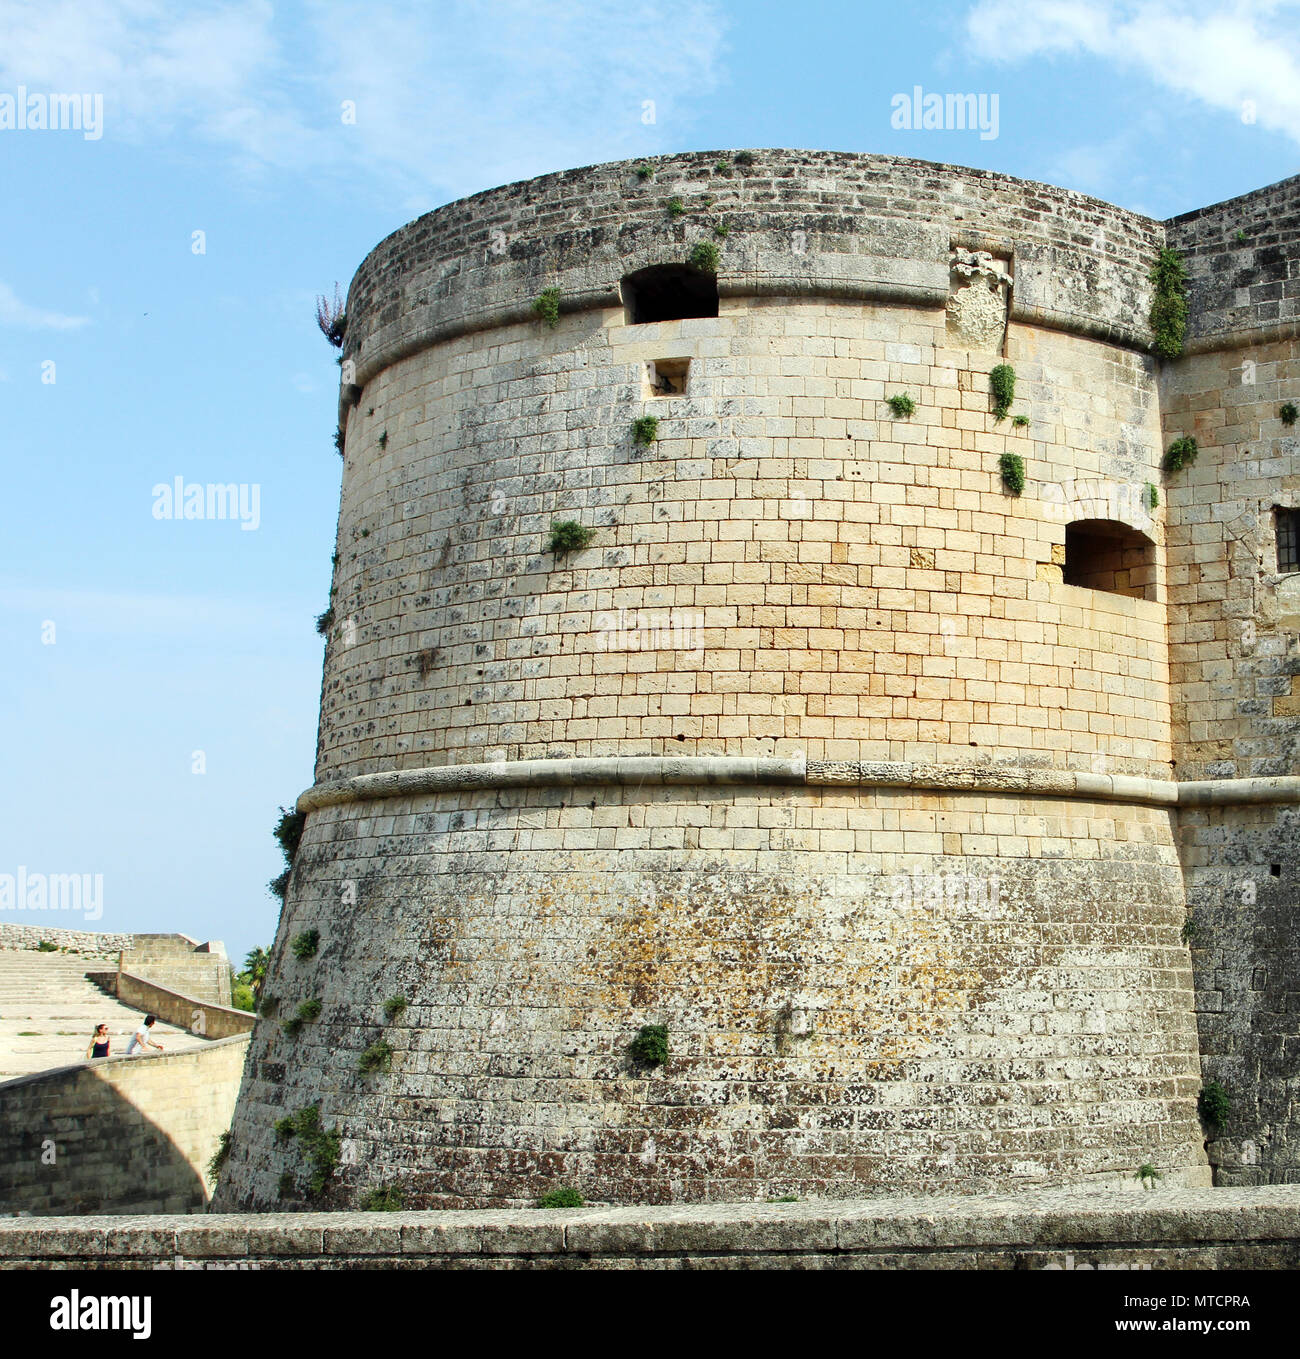 The Castle of Otranto - Corigliano d'Otranto, Apulia, Italy. A Baroque façade built during the 17th century Stock Photo